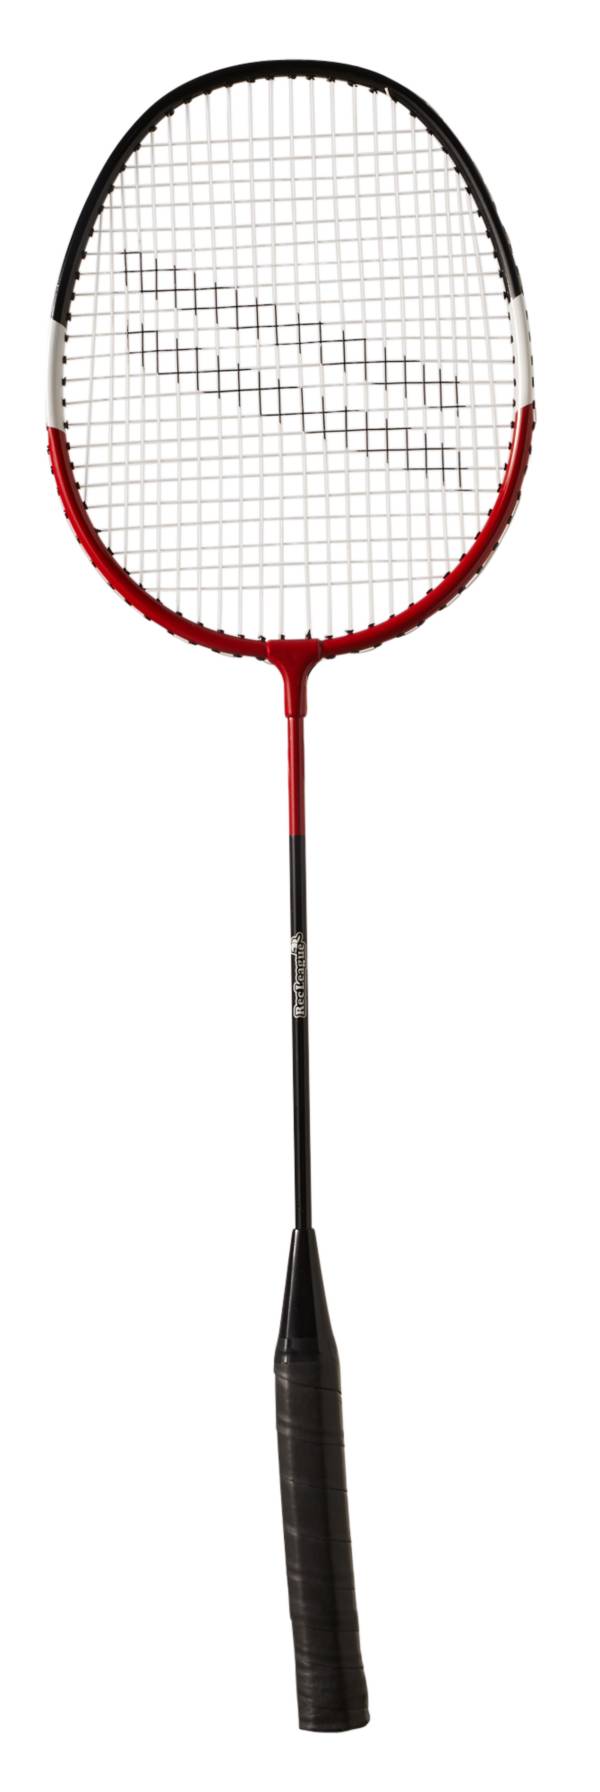 Rec League Badminton | Dick's Sporting